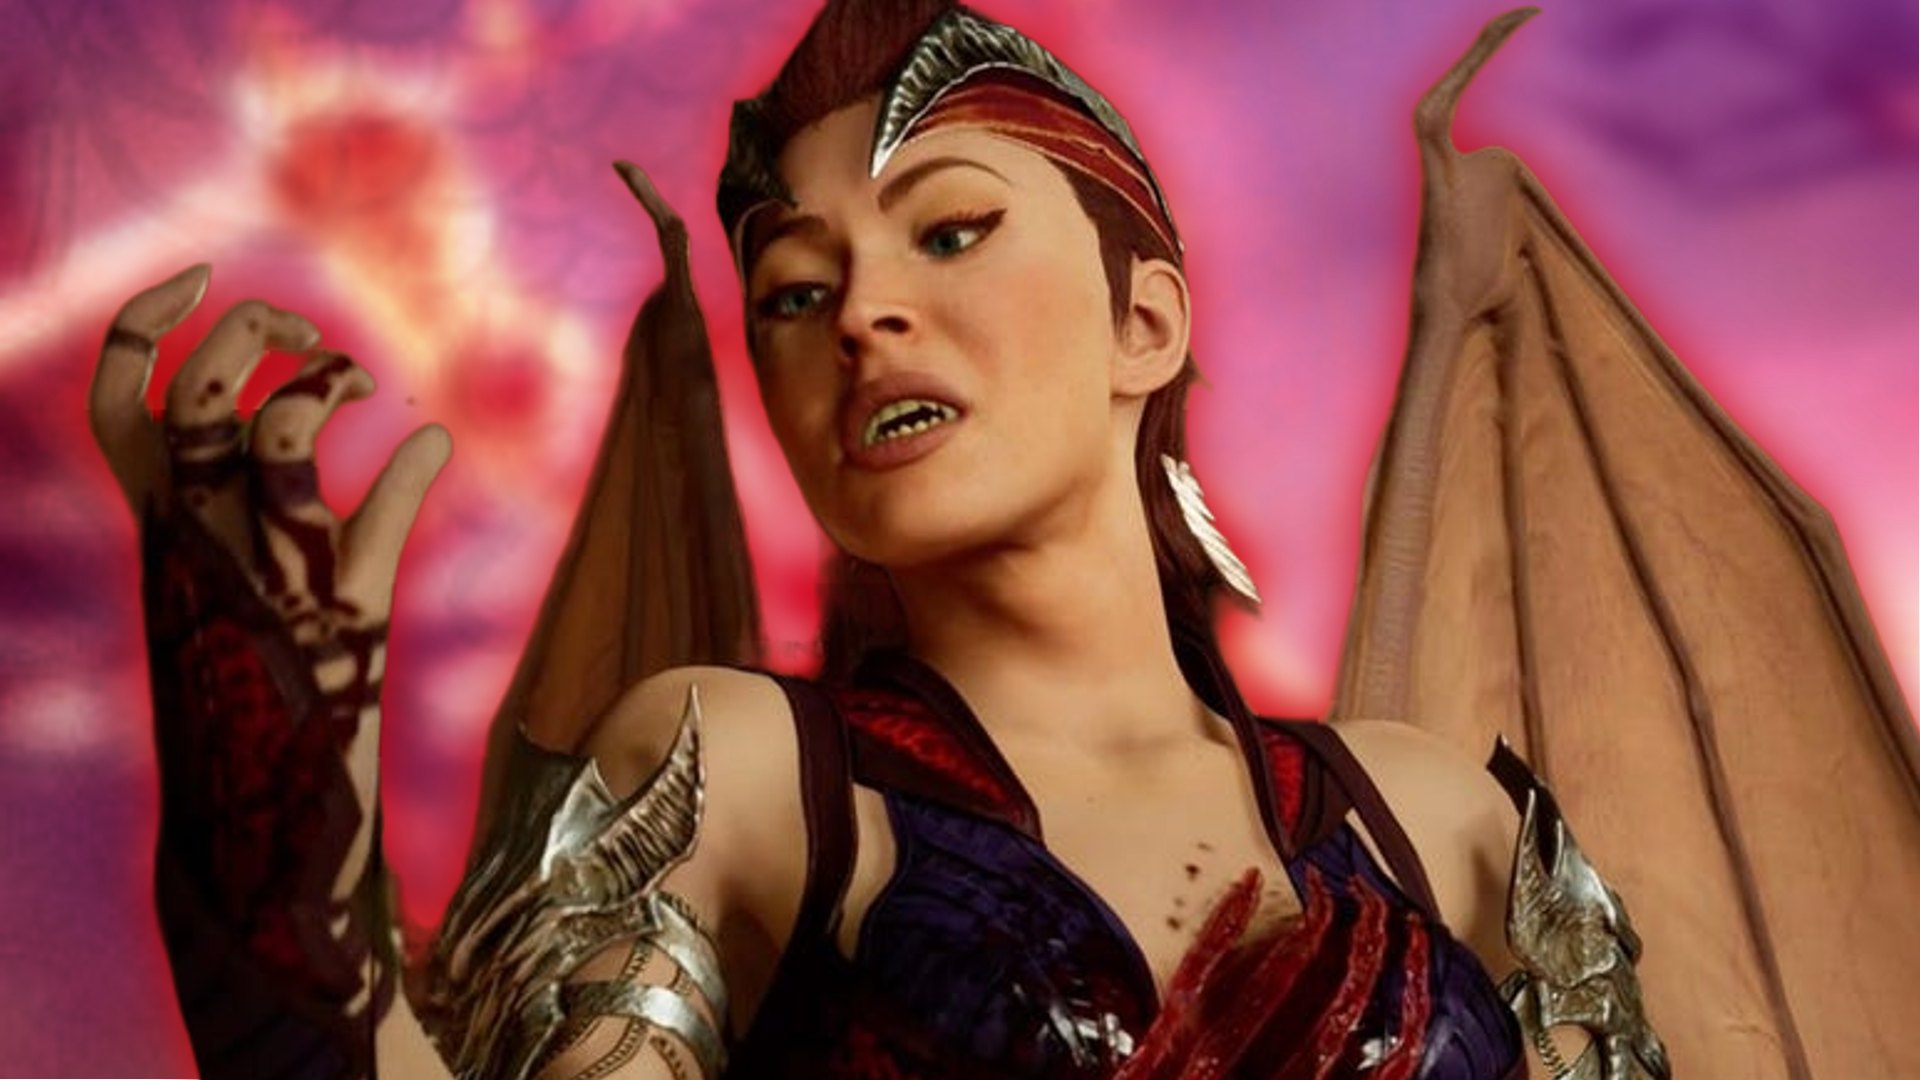 Mortal Kombat 1 Datamine Reveals Potential Future DLC Characters